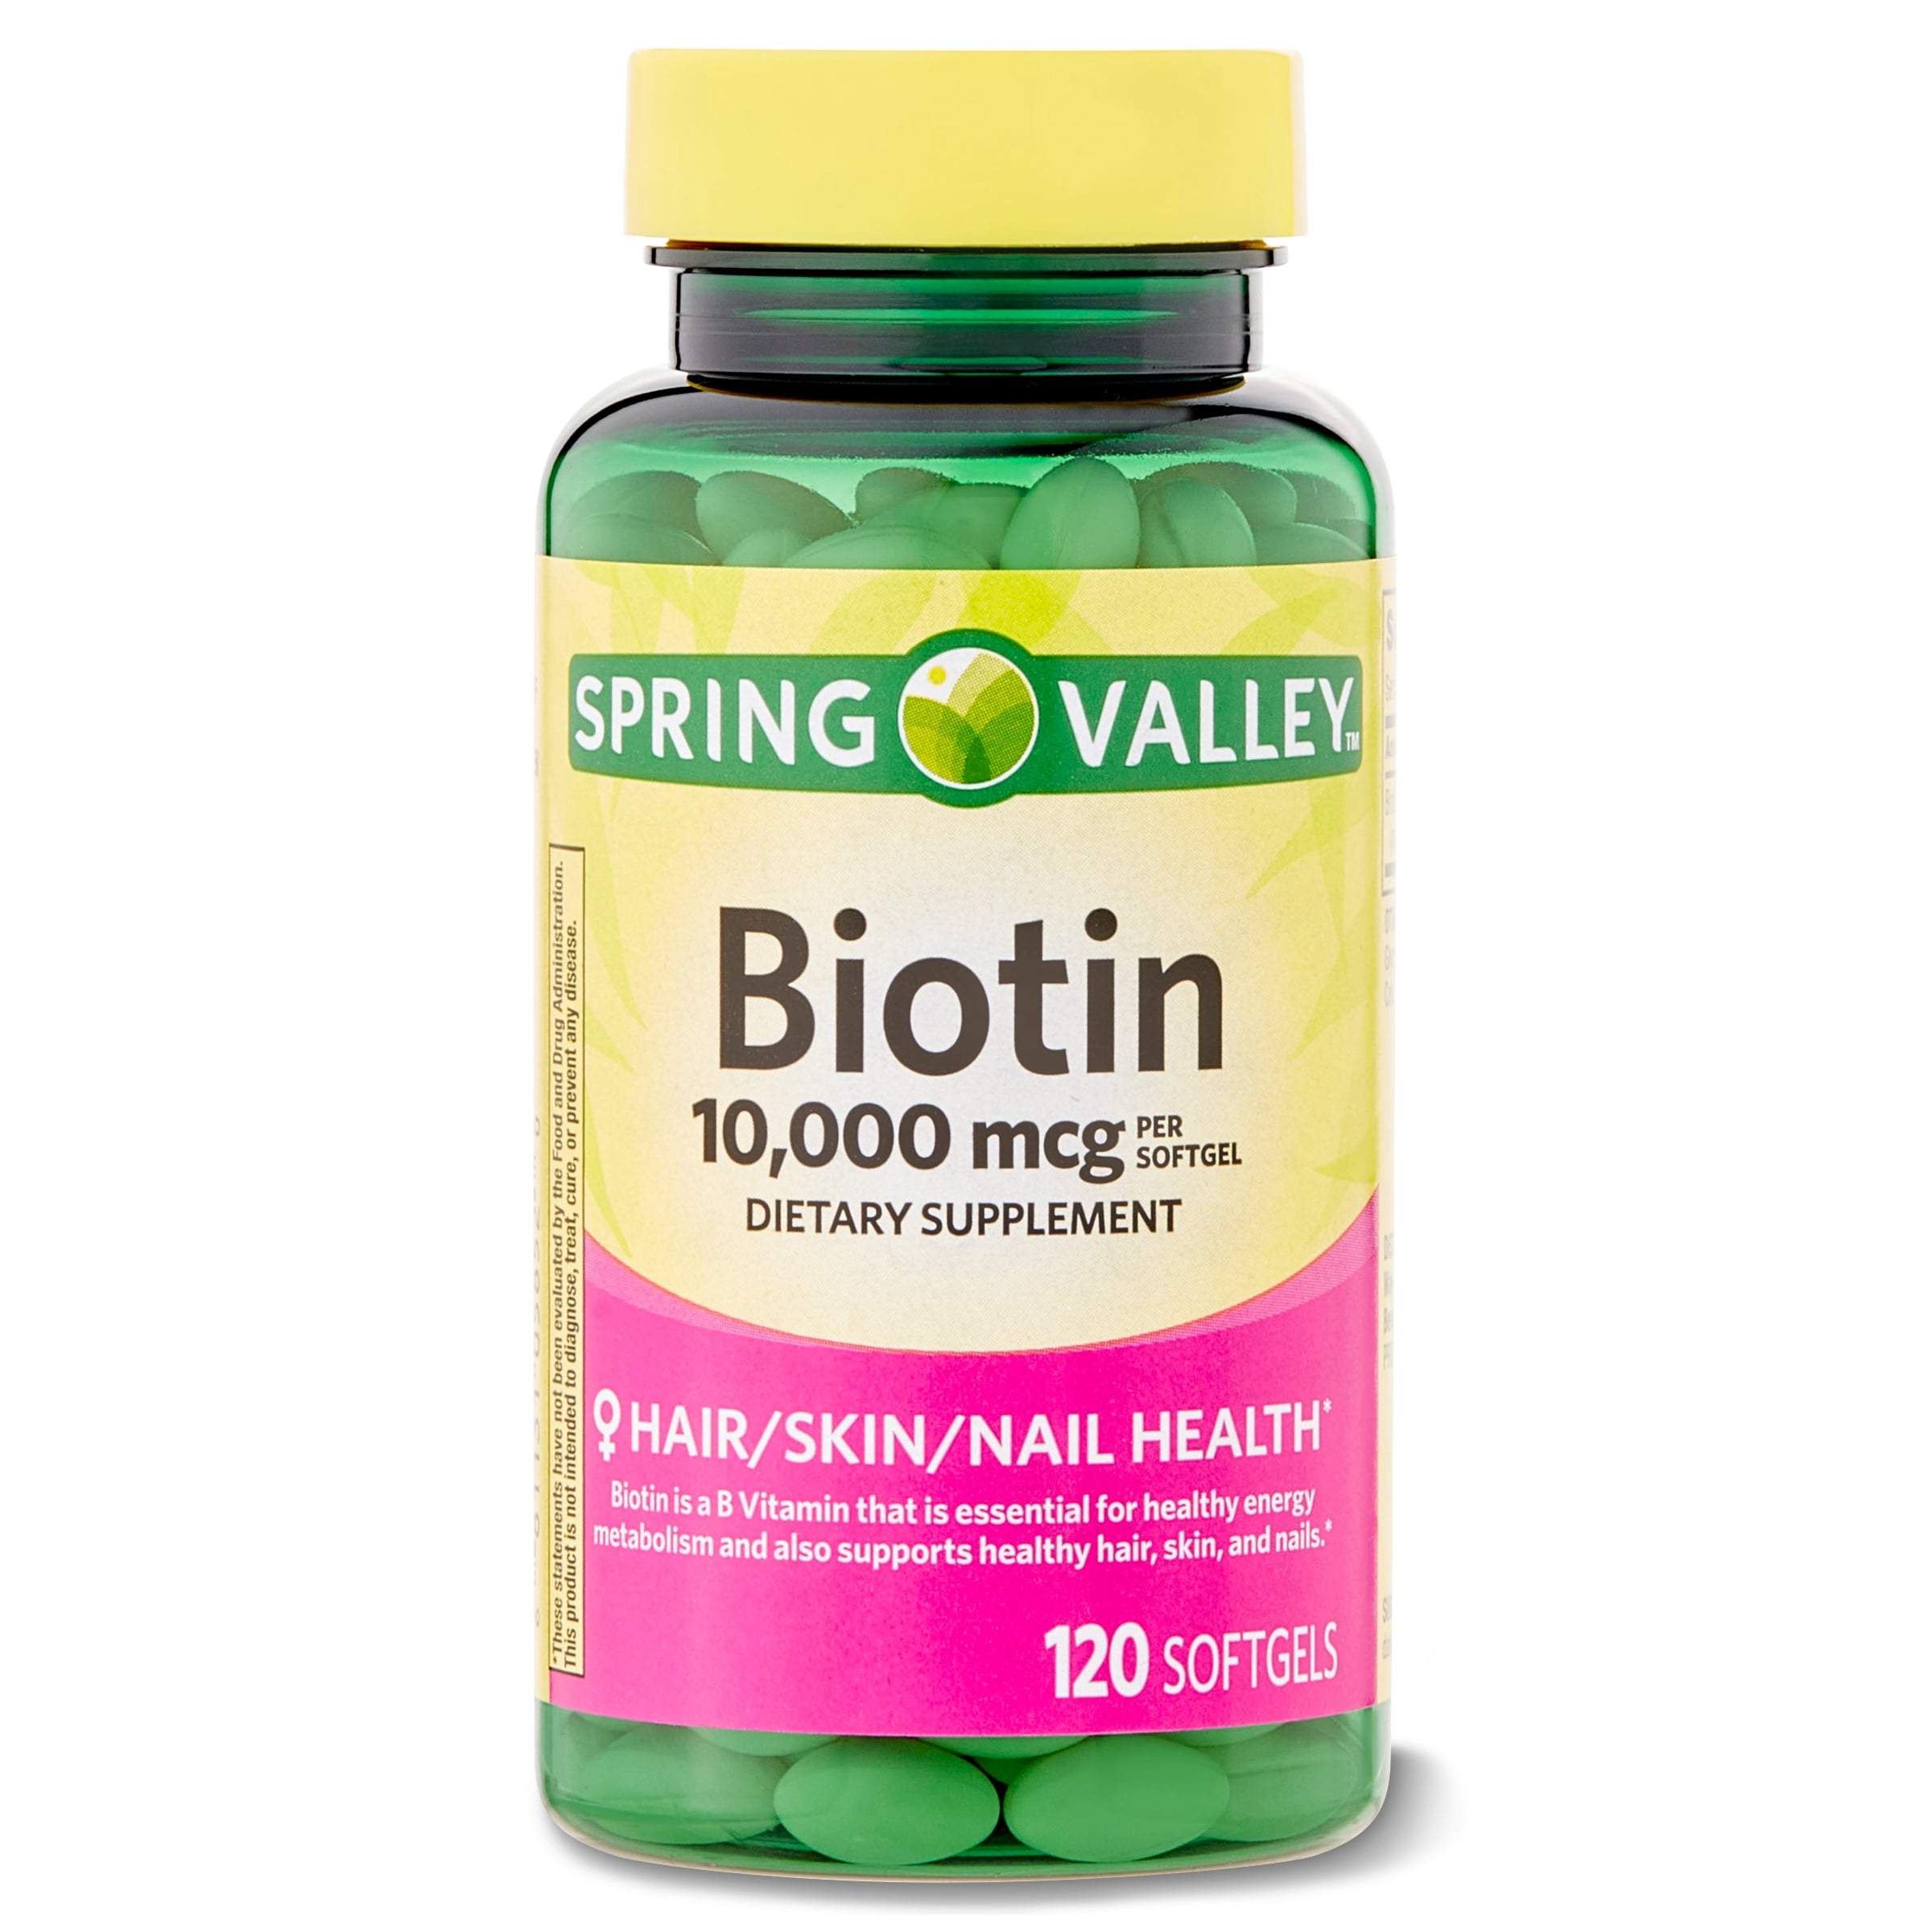 Spring Valley Biotin Softgels, Dietary Supplement, 10,000 mcg, 120 Count -  